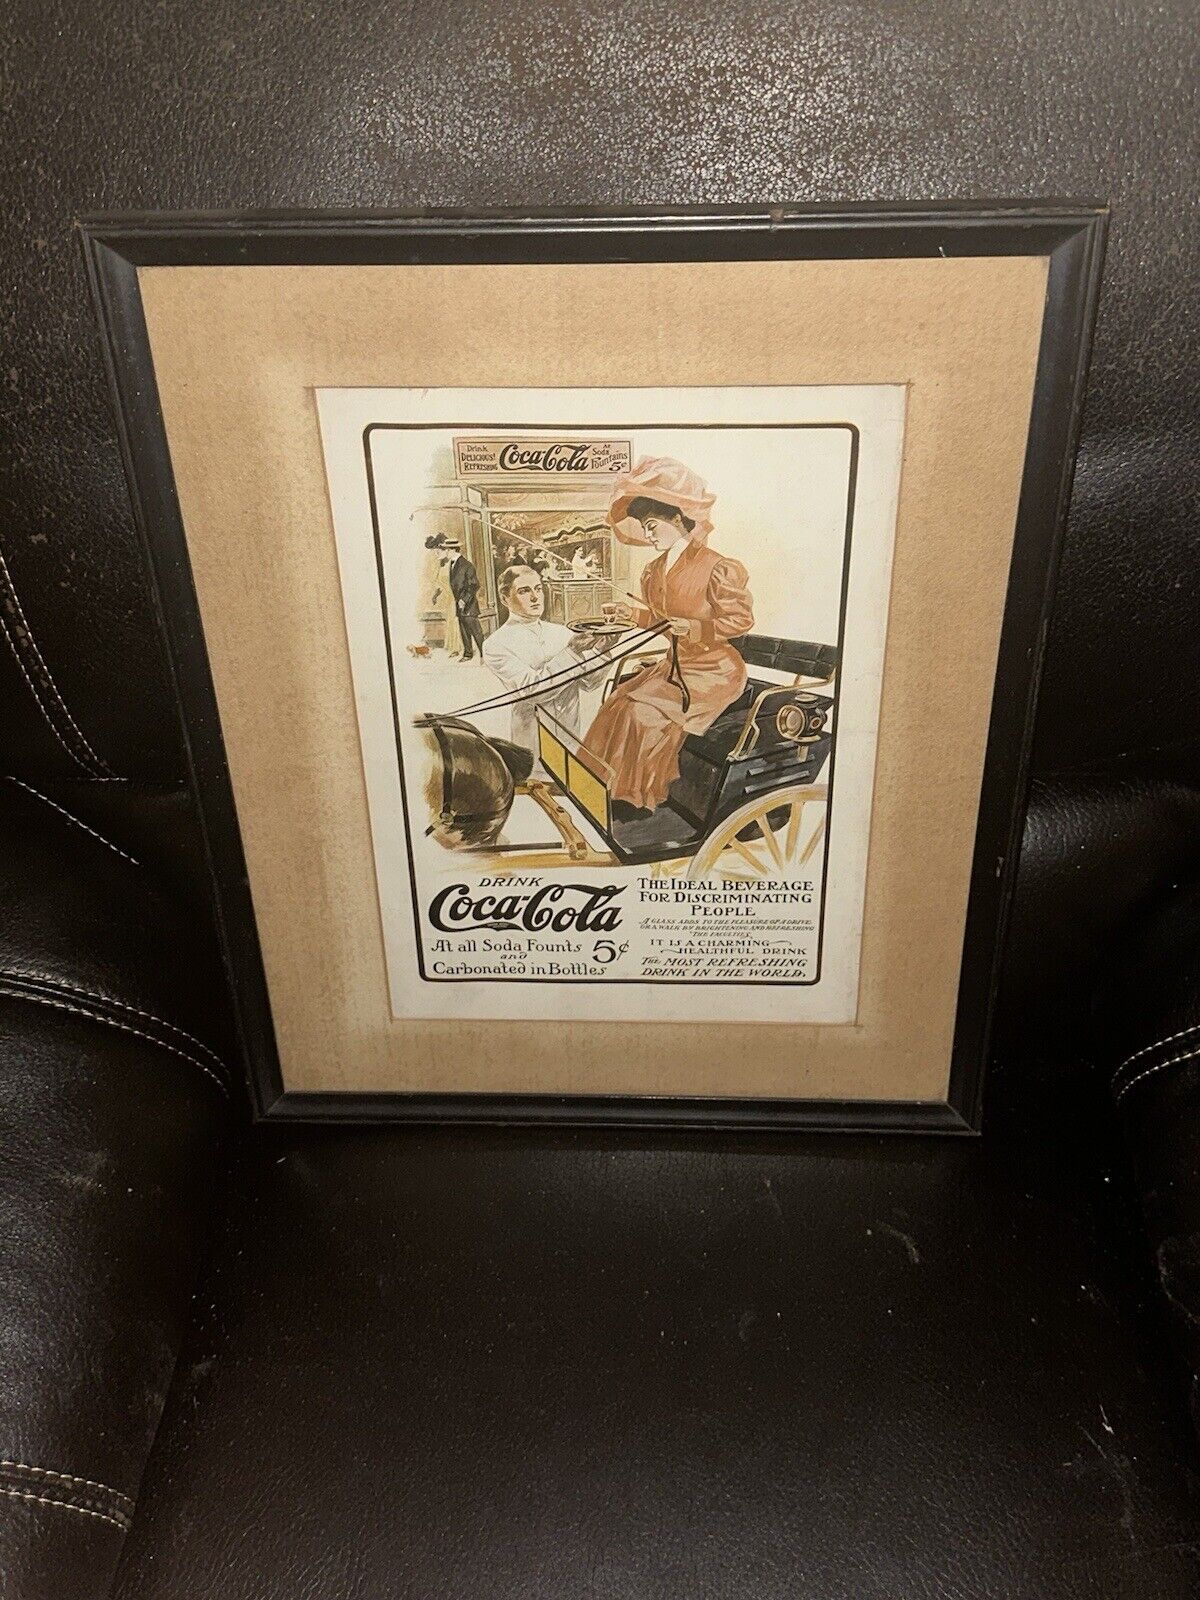 Vintage Framed Coca-Cola Coke Advertising Prints Collectable Memorabilia